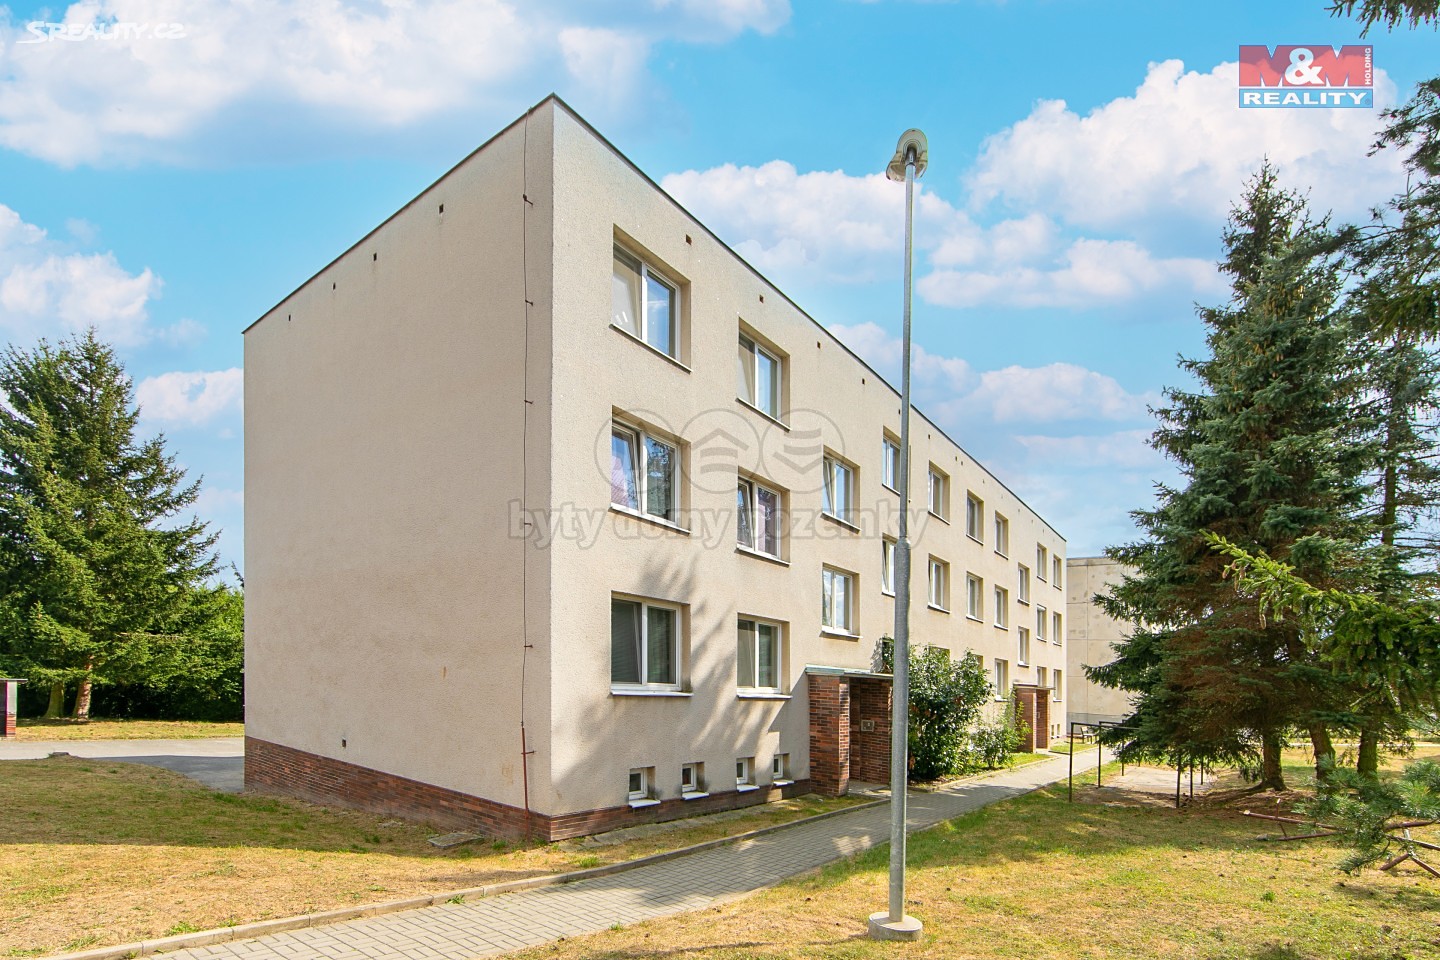 Pronájem bytu 3+1 65 m², Všeruby, okres Plzeň-sever